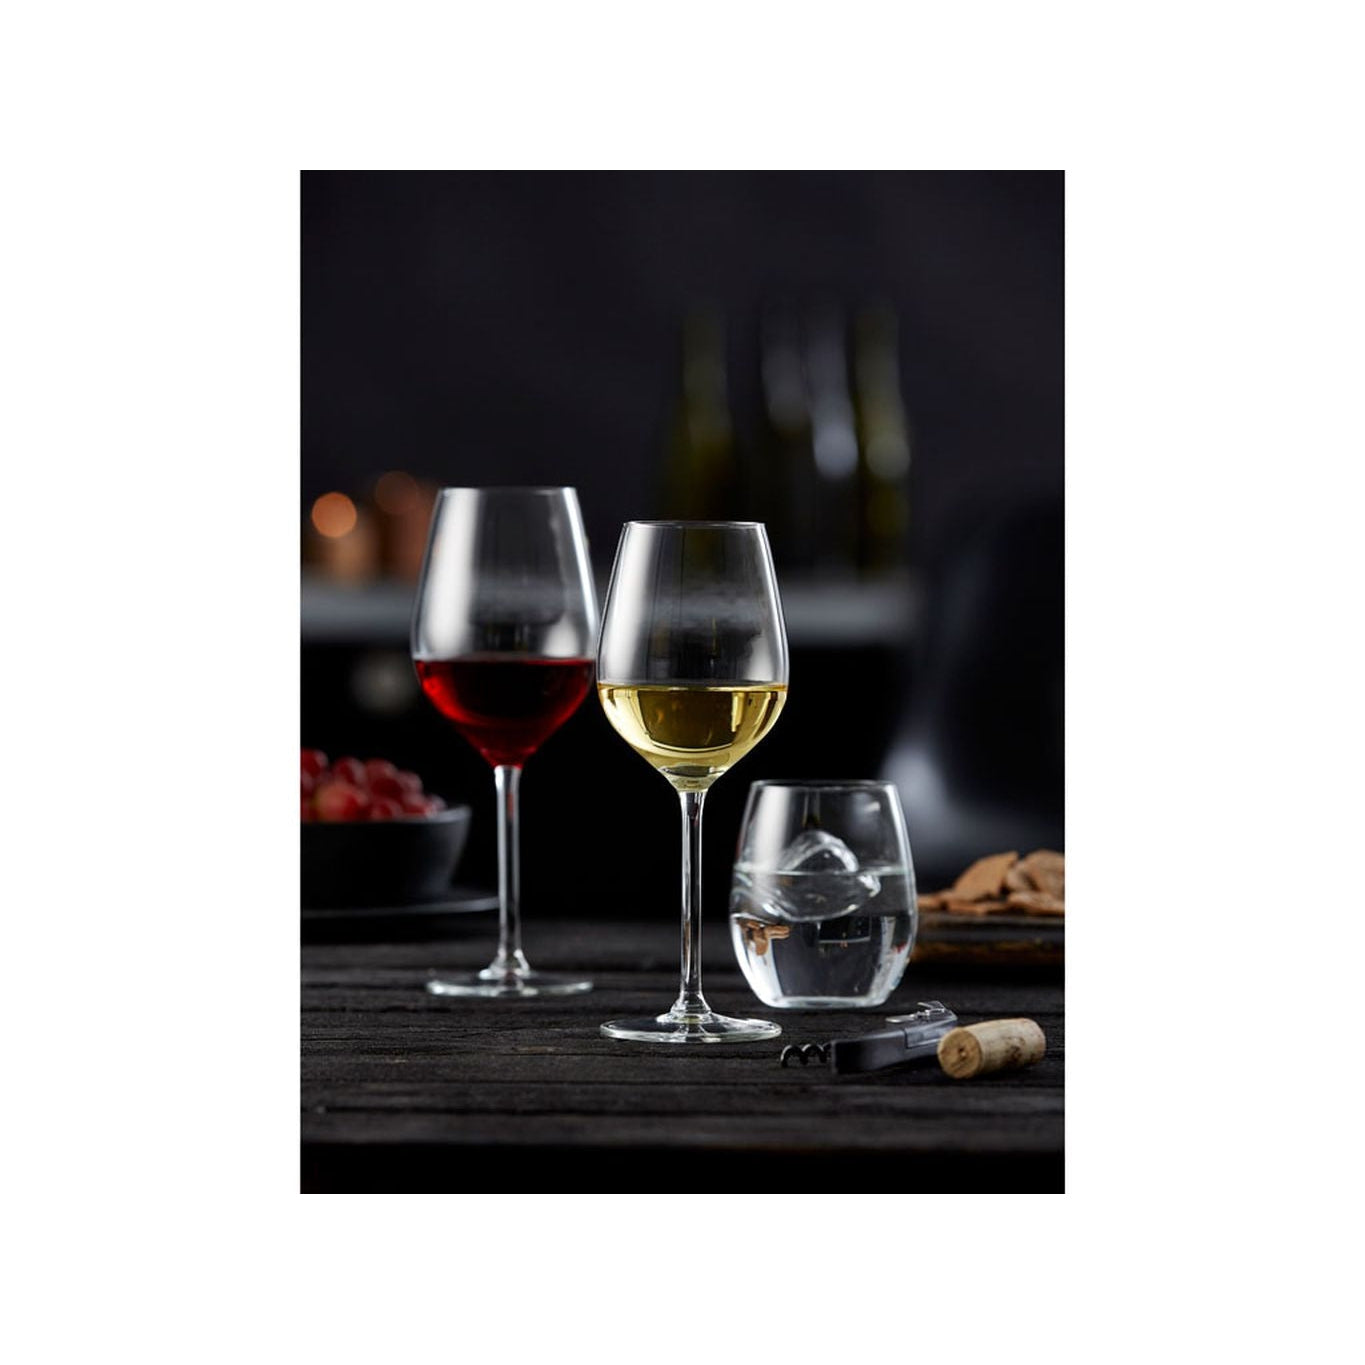 Lyngby Glas Juvel White Wine Glass 38 Cl, 4 ks.